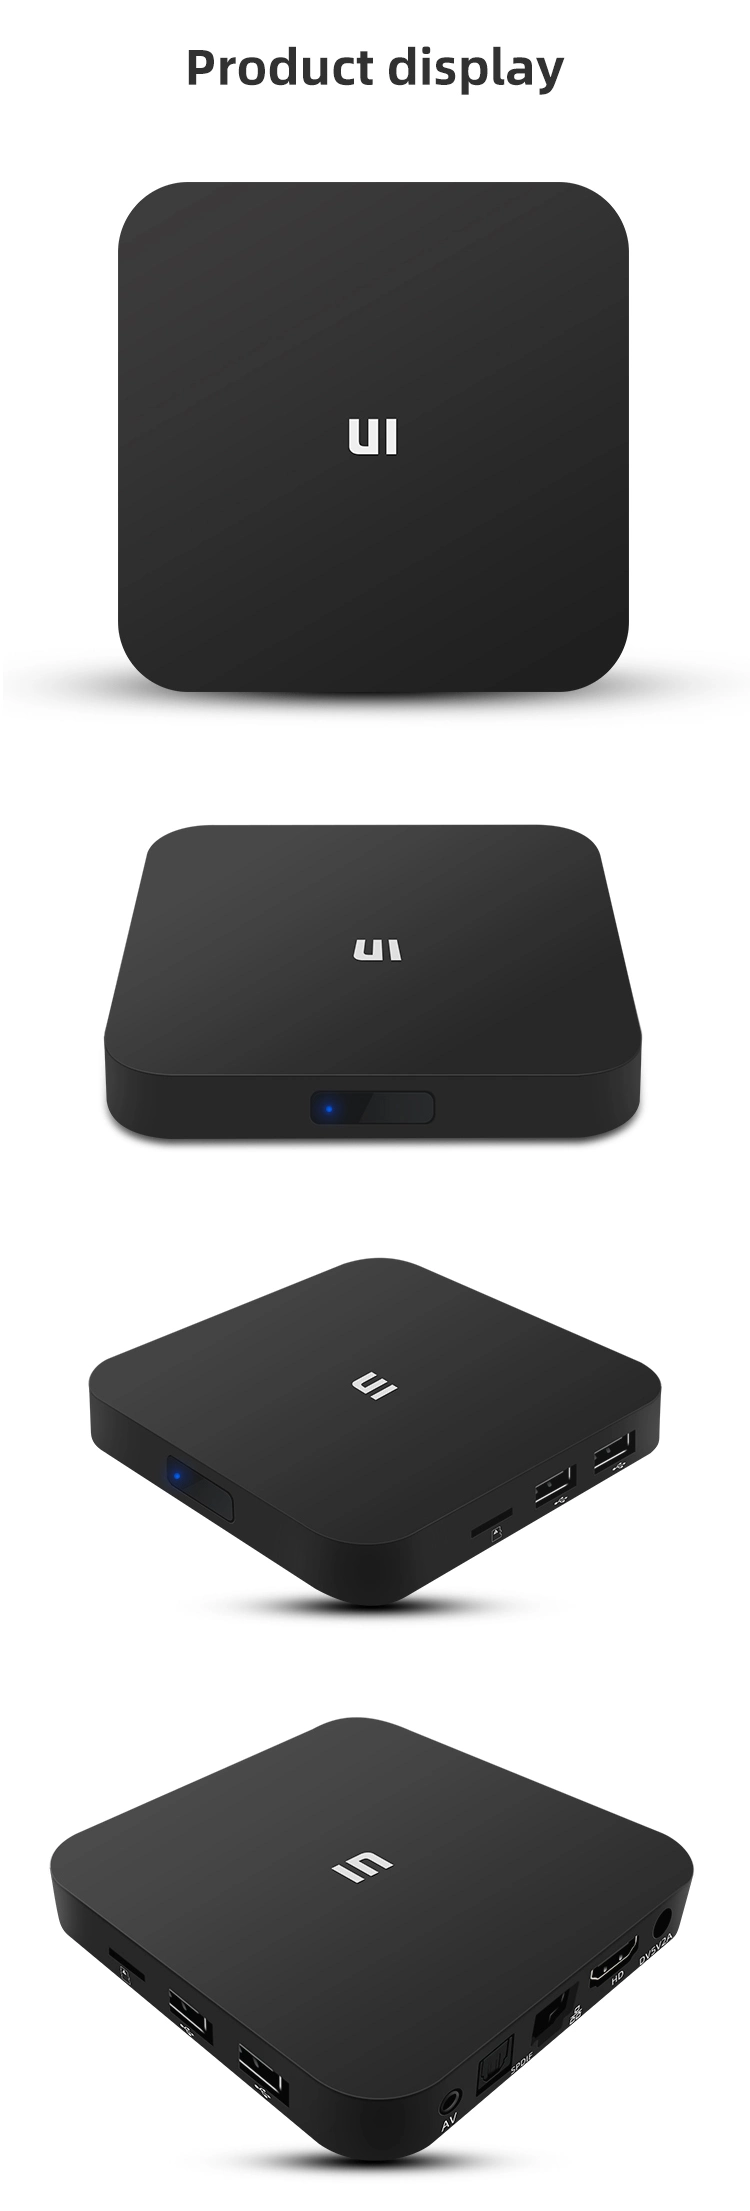 Blue Color Smart TV Box Android 9.1 Ott TV Box on Sale